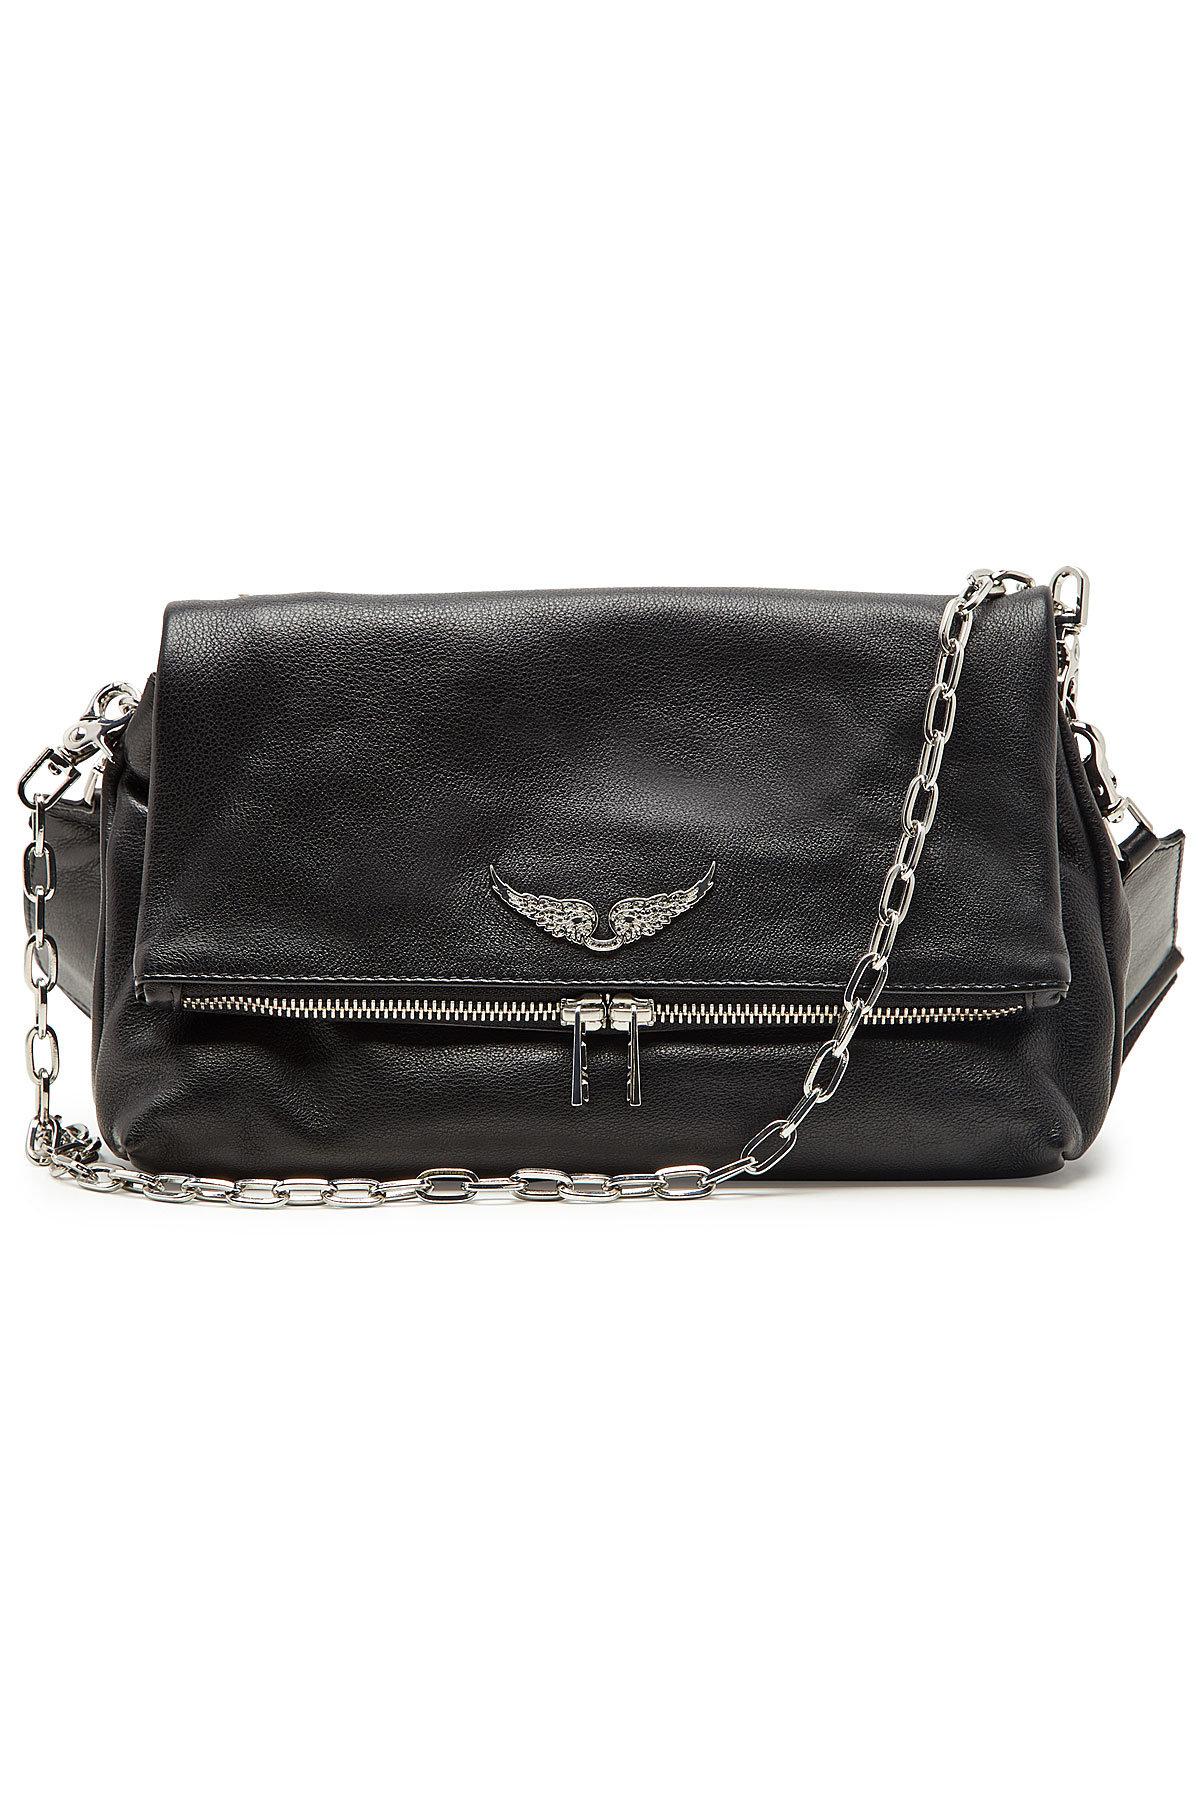 Zadig & Voltaire Rocky Leather Shoulder Bag in Black - Lyst